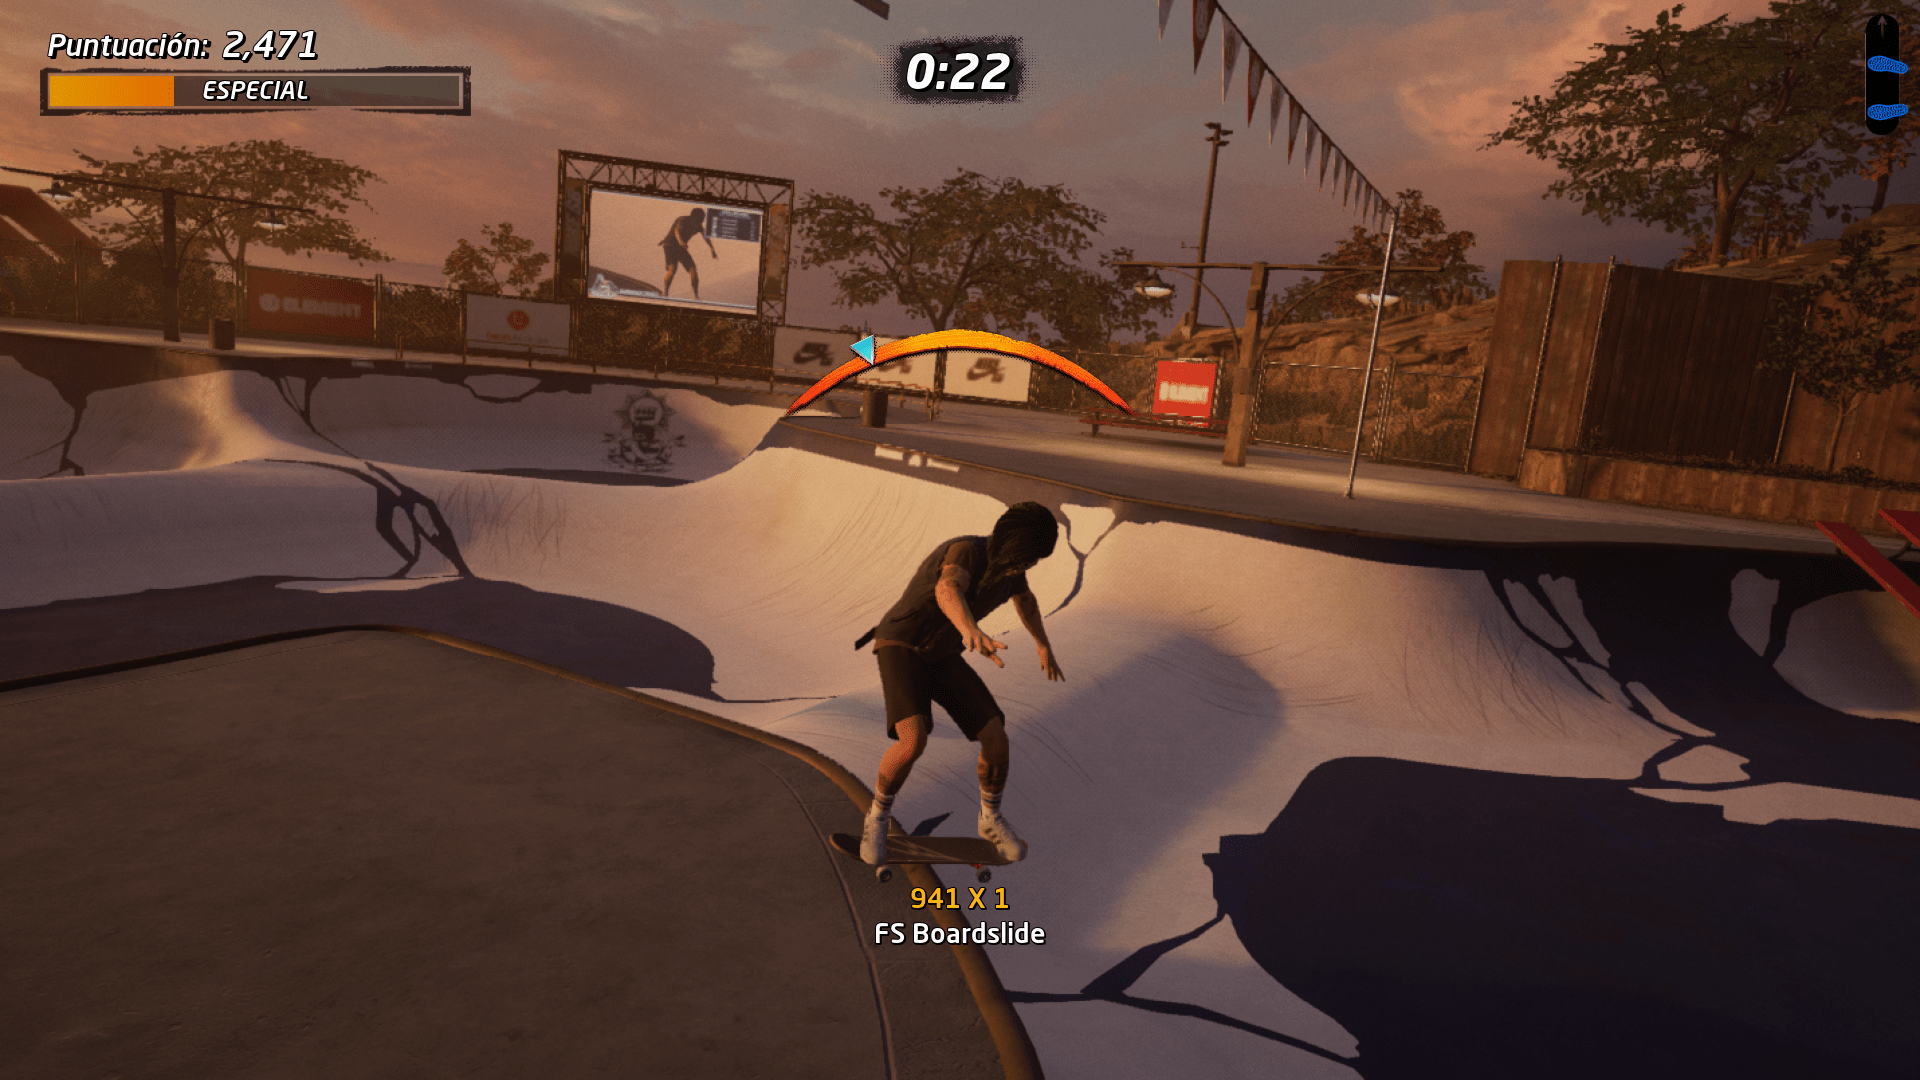 Tony Hawk's Pro Skater 1 + 2: ¿Vale o no la pena? (Review)